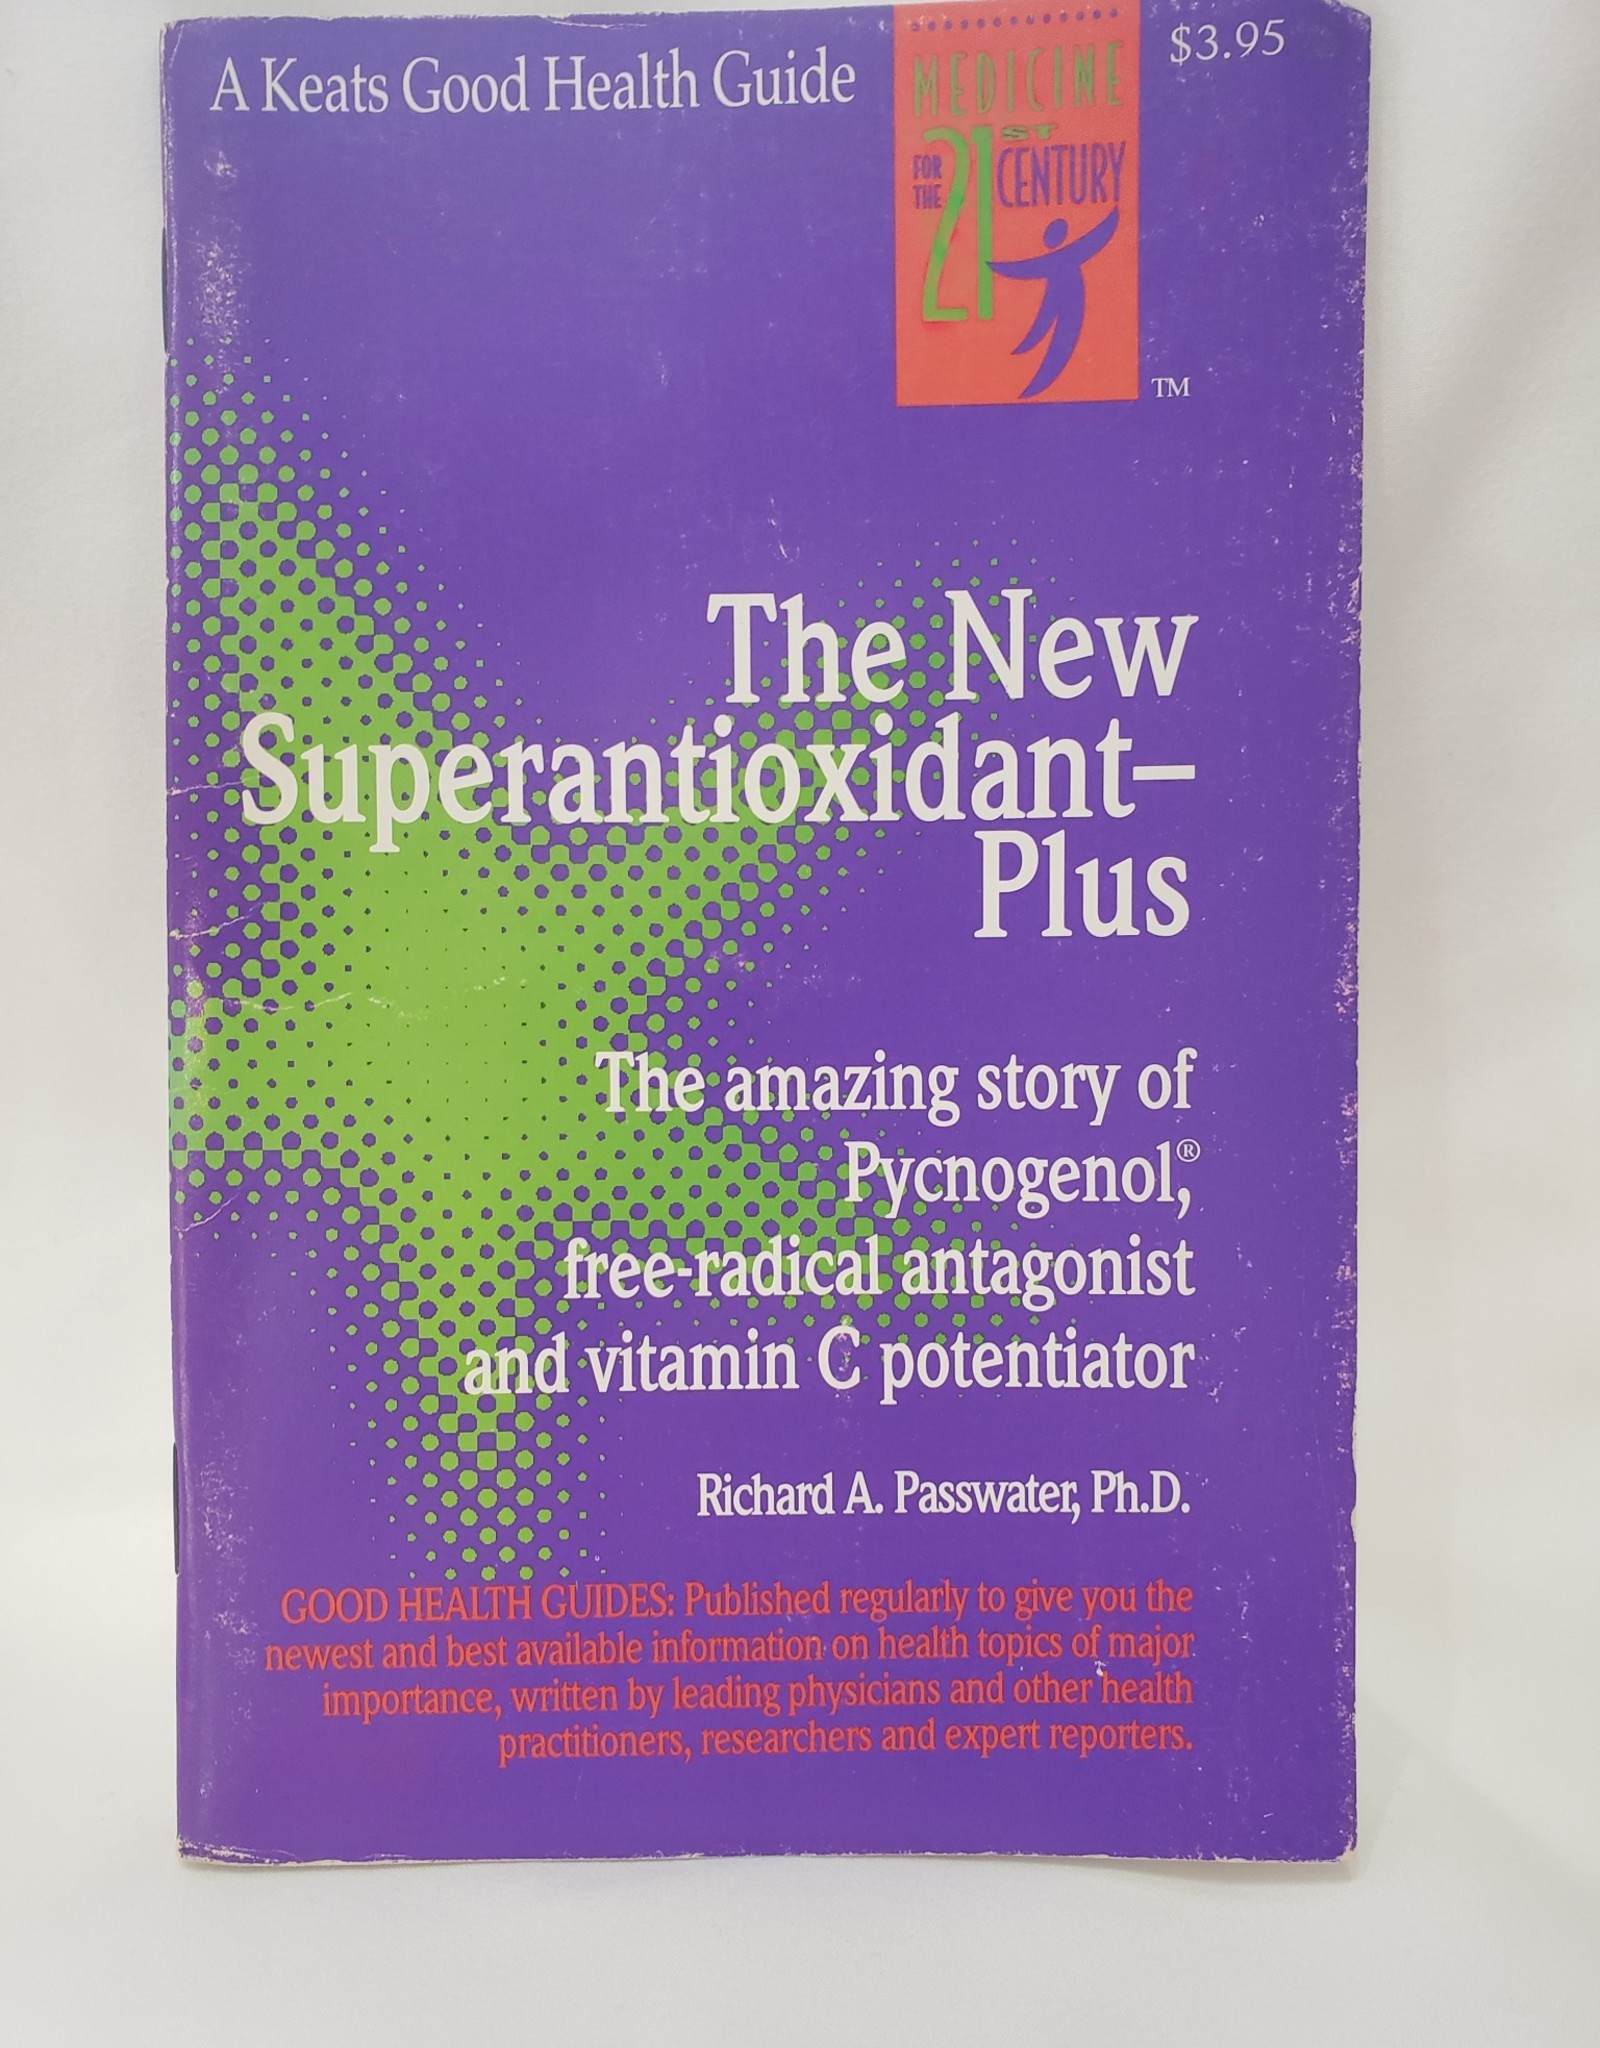 The New Superantioxidant Plus